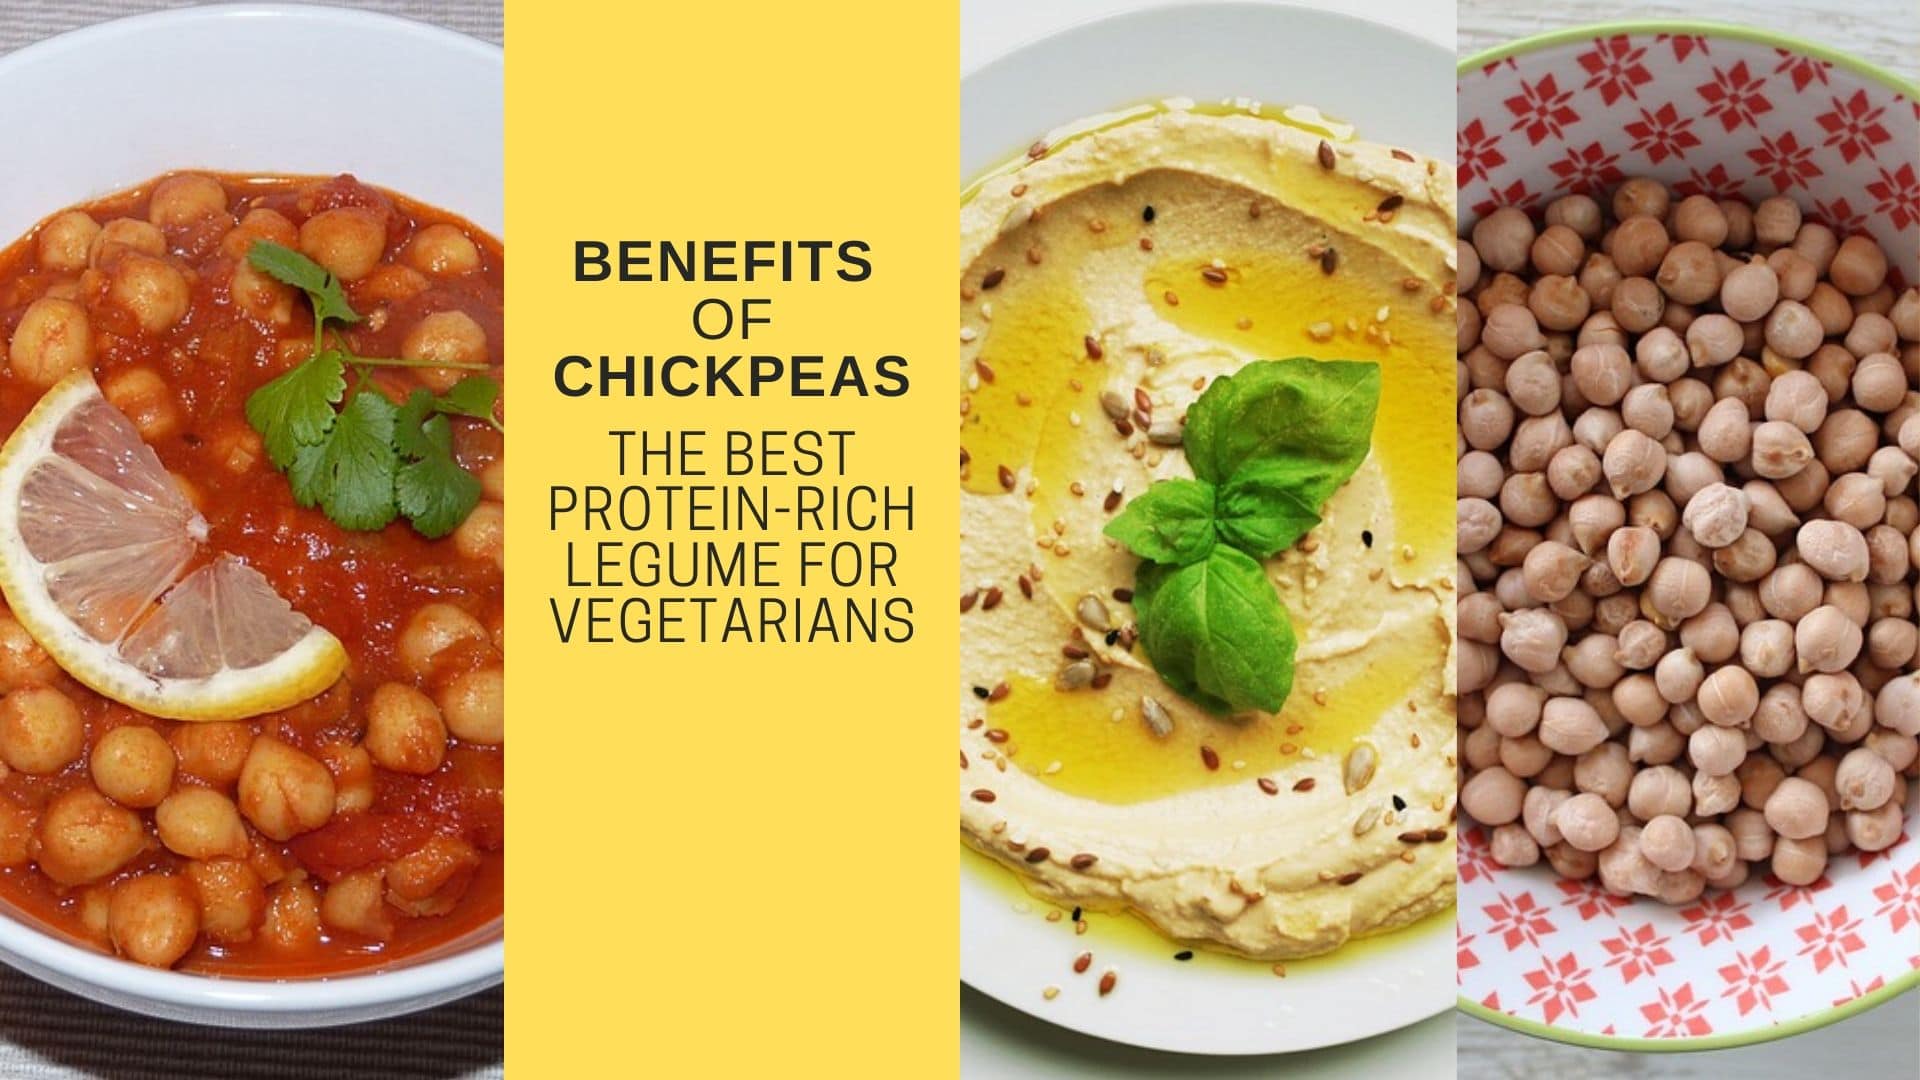 Benefits of Chickpeas: The Best Protein-Rich Legume For Vegetarians